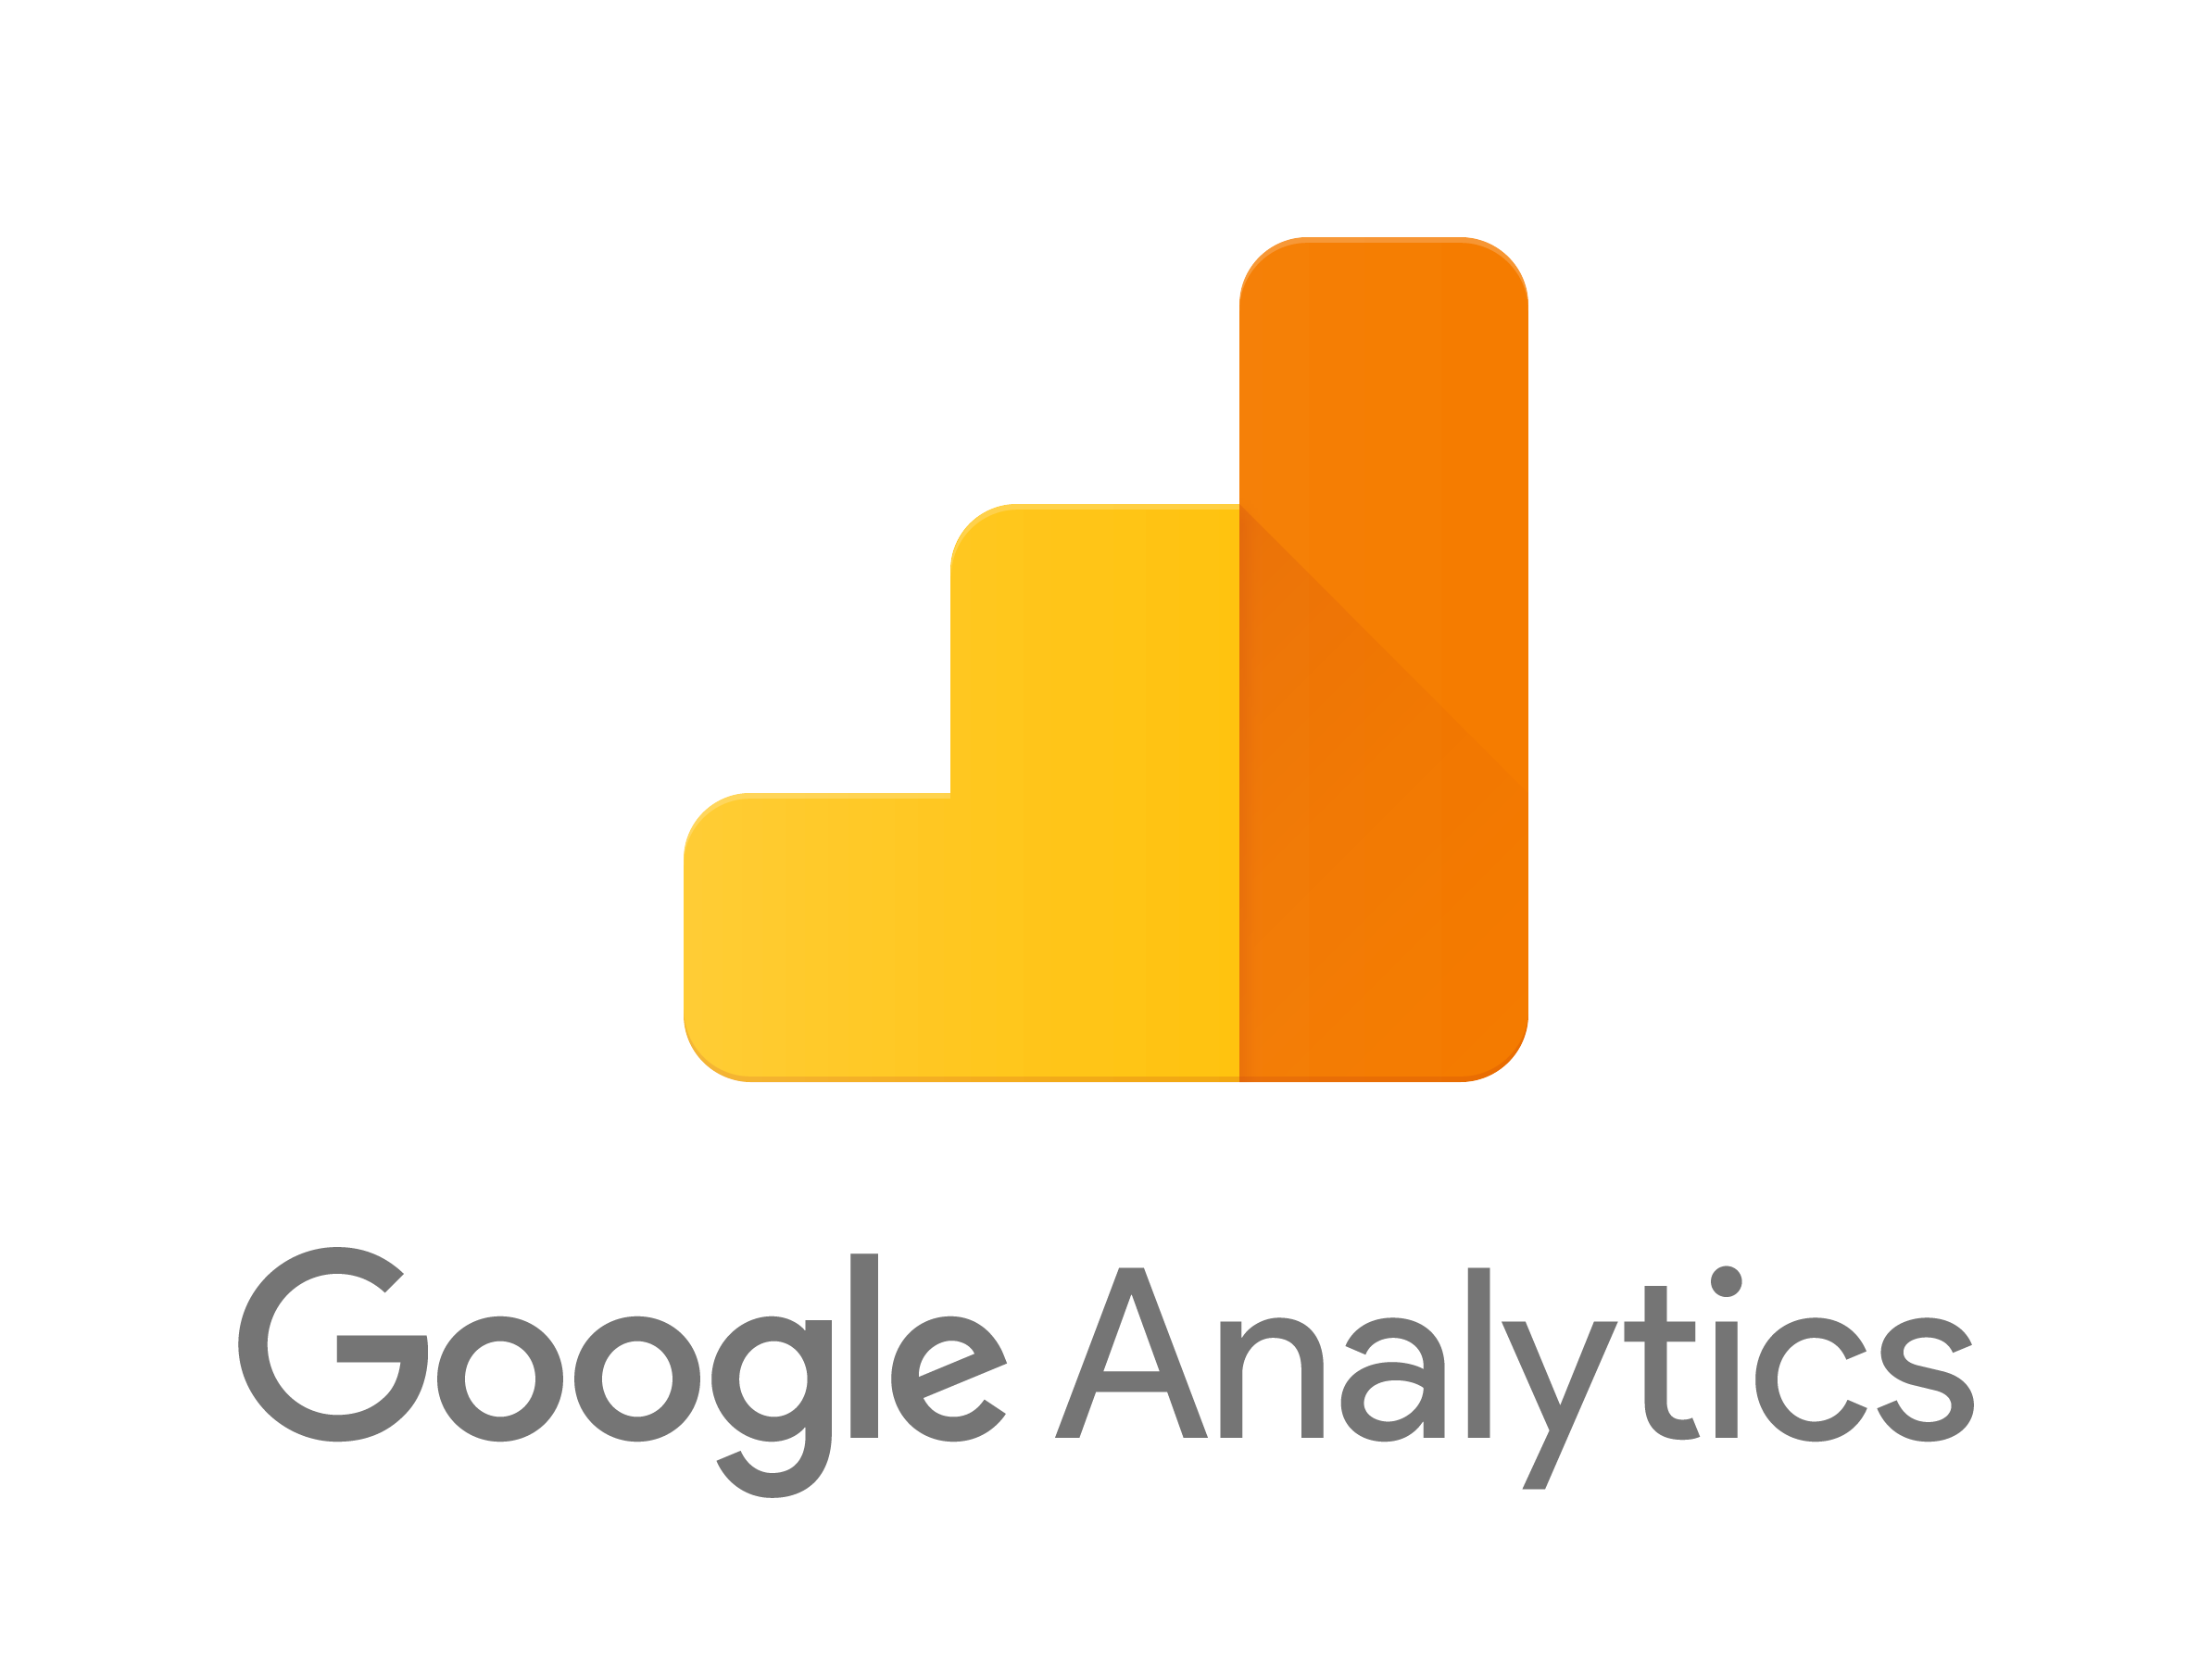 logo_analytics_icon